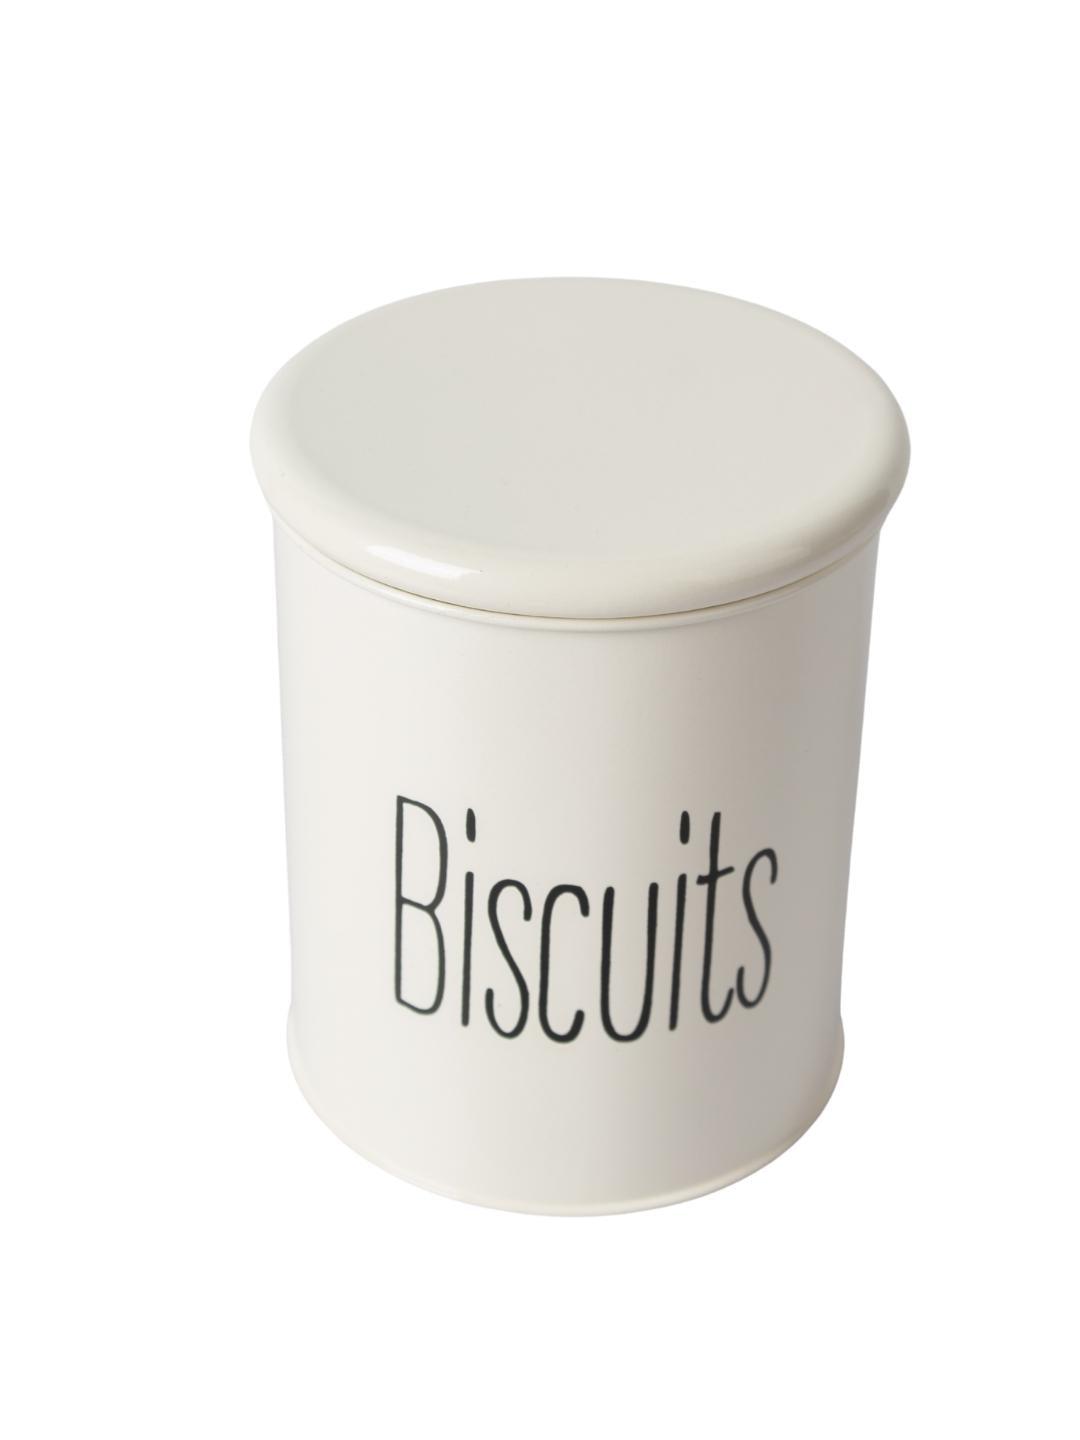 Tea & Sugar Jar (Each 900 Ml) +  Biscuits & Namkeen Jar (Each 1700 Ml) - White, Set Of 4